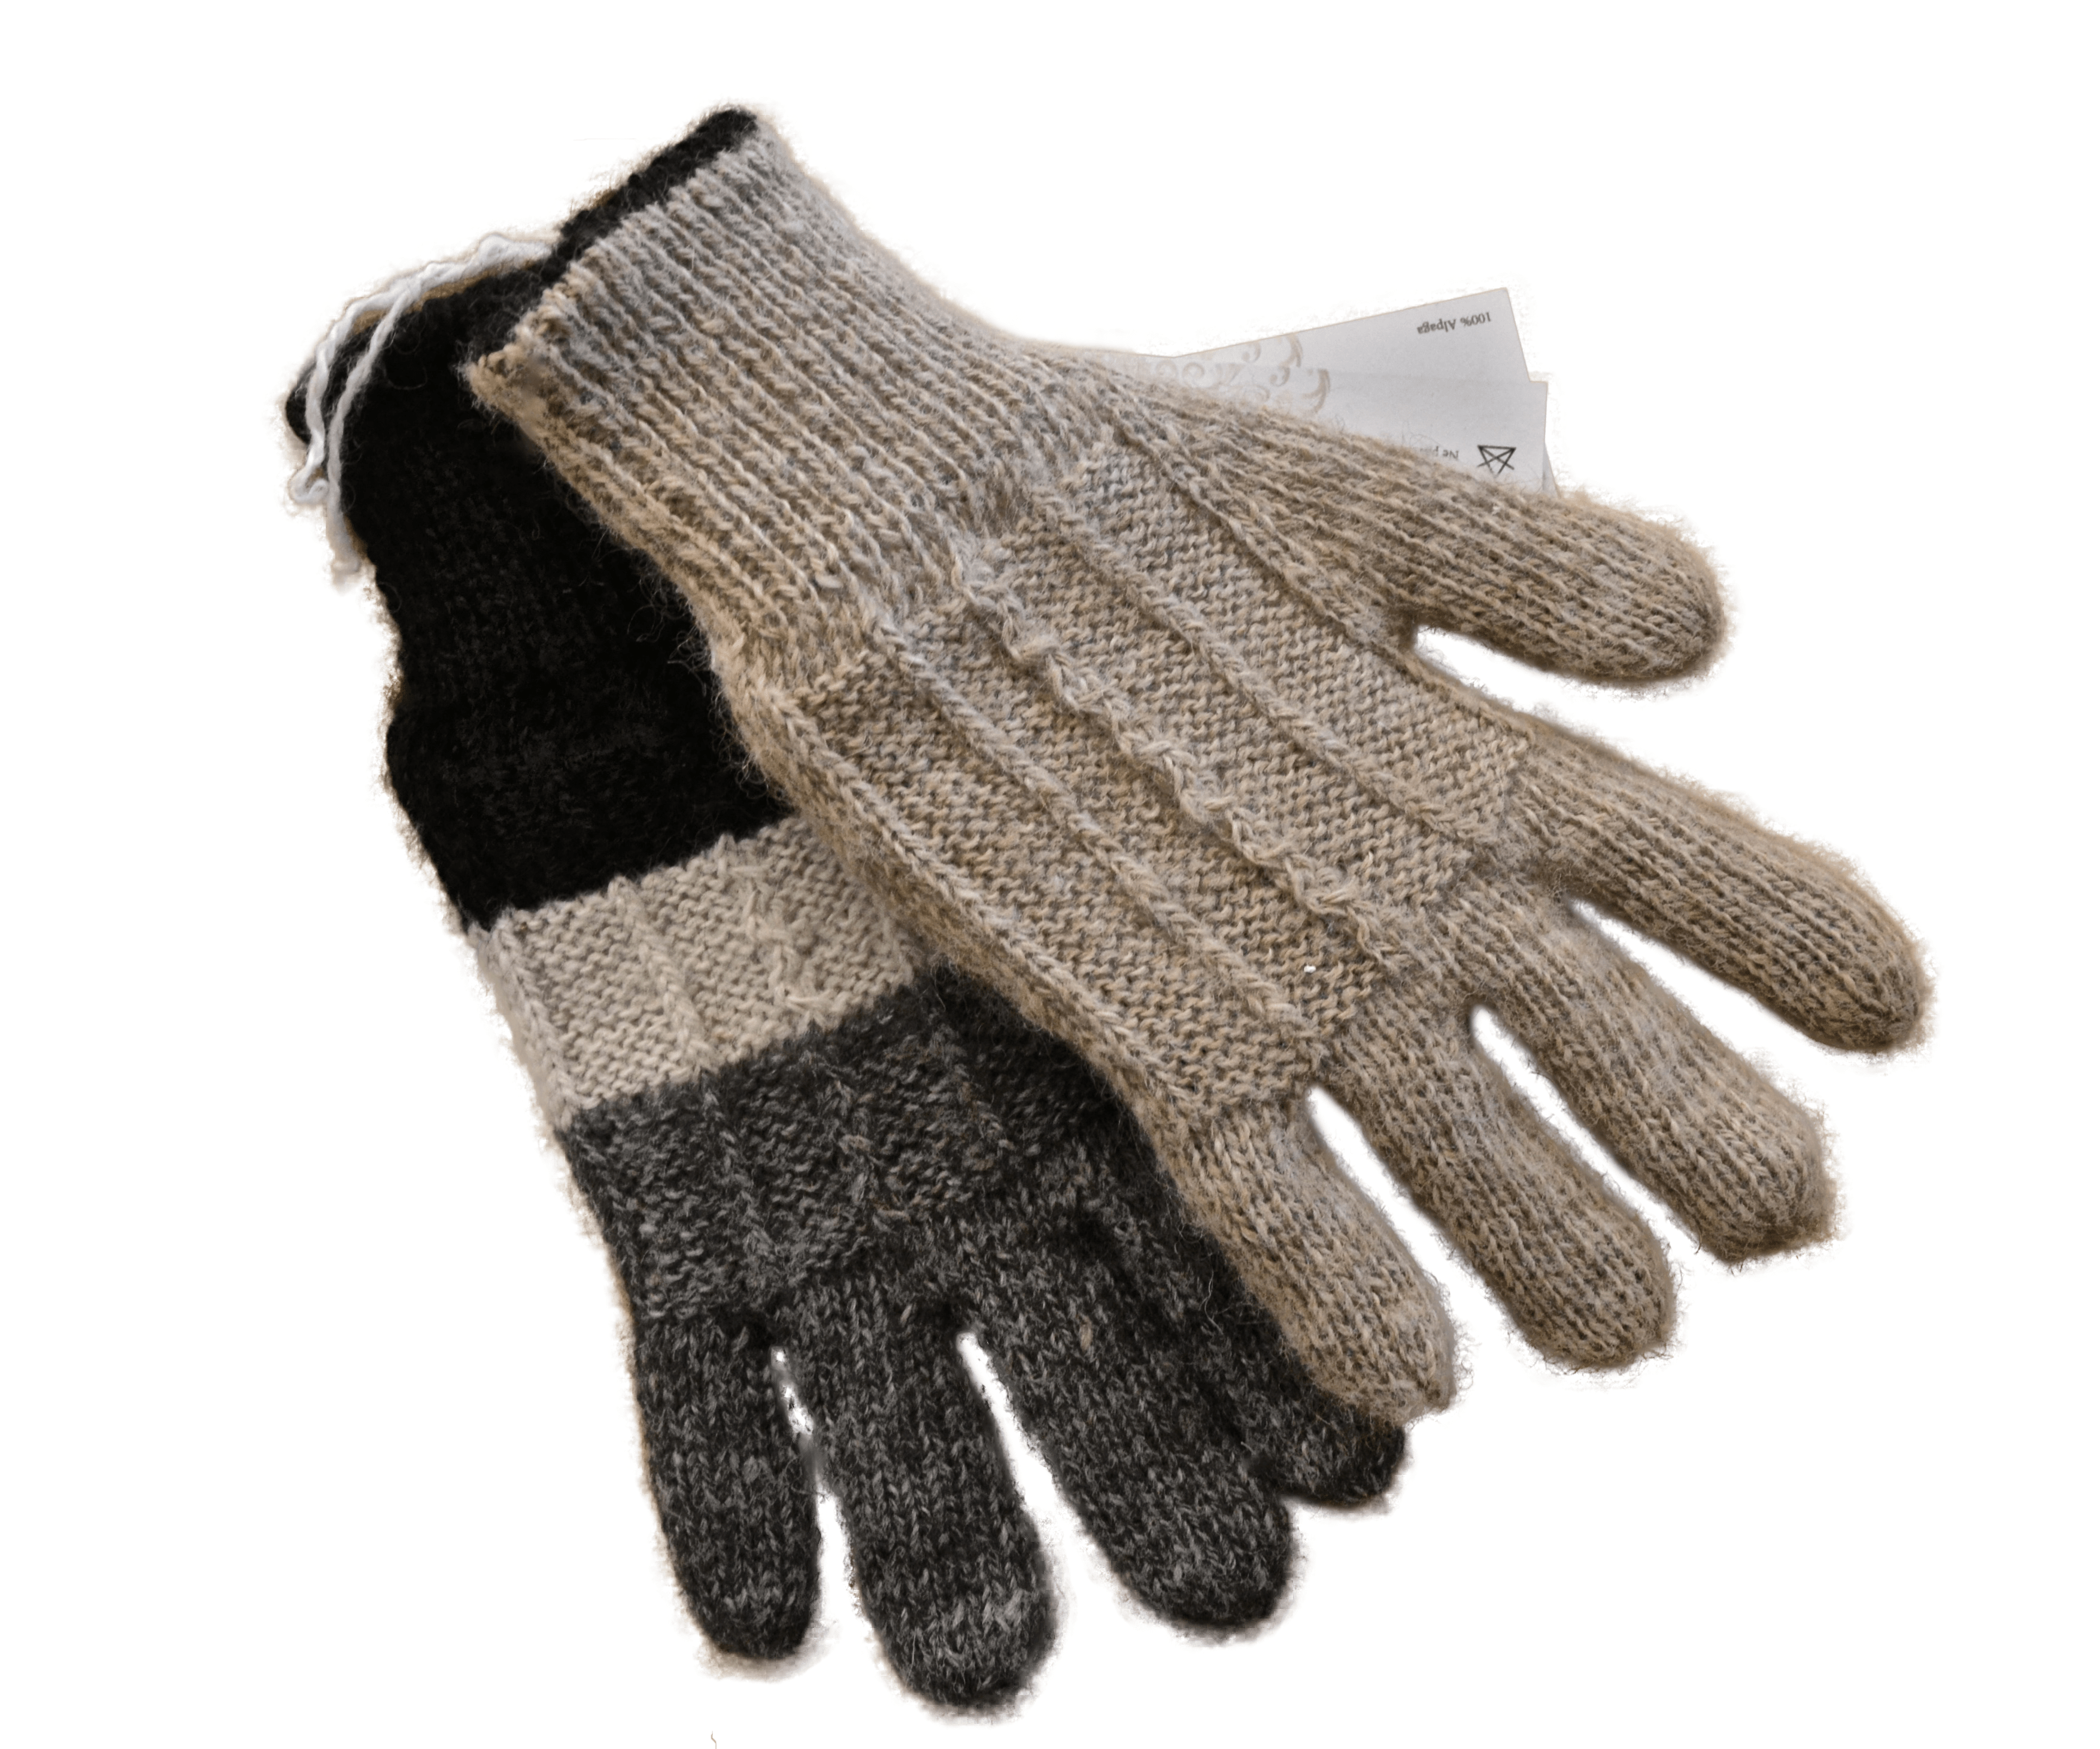 Gant chaud laine d'alpaga contre le froid - La Maison de l'Alpaga (LMA)